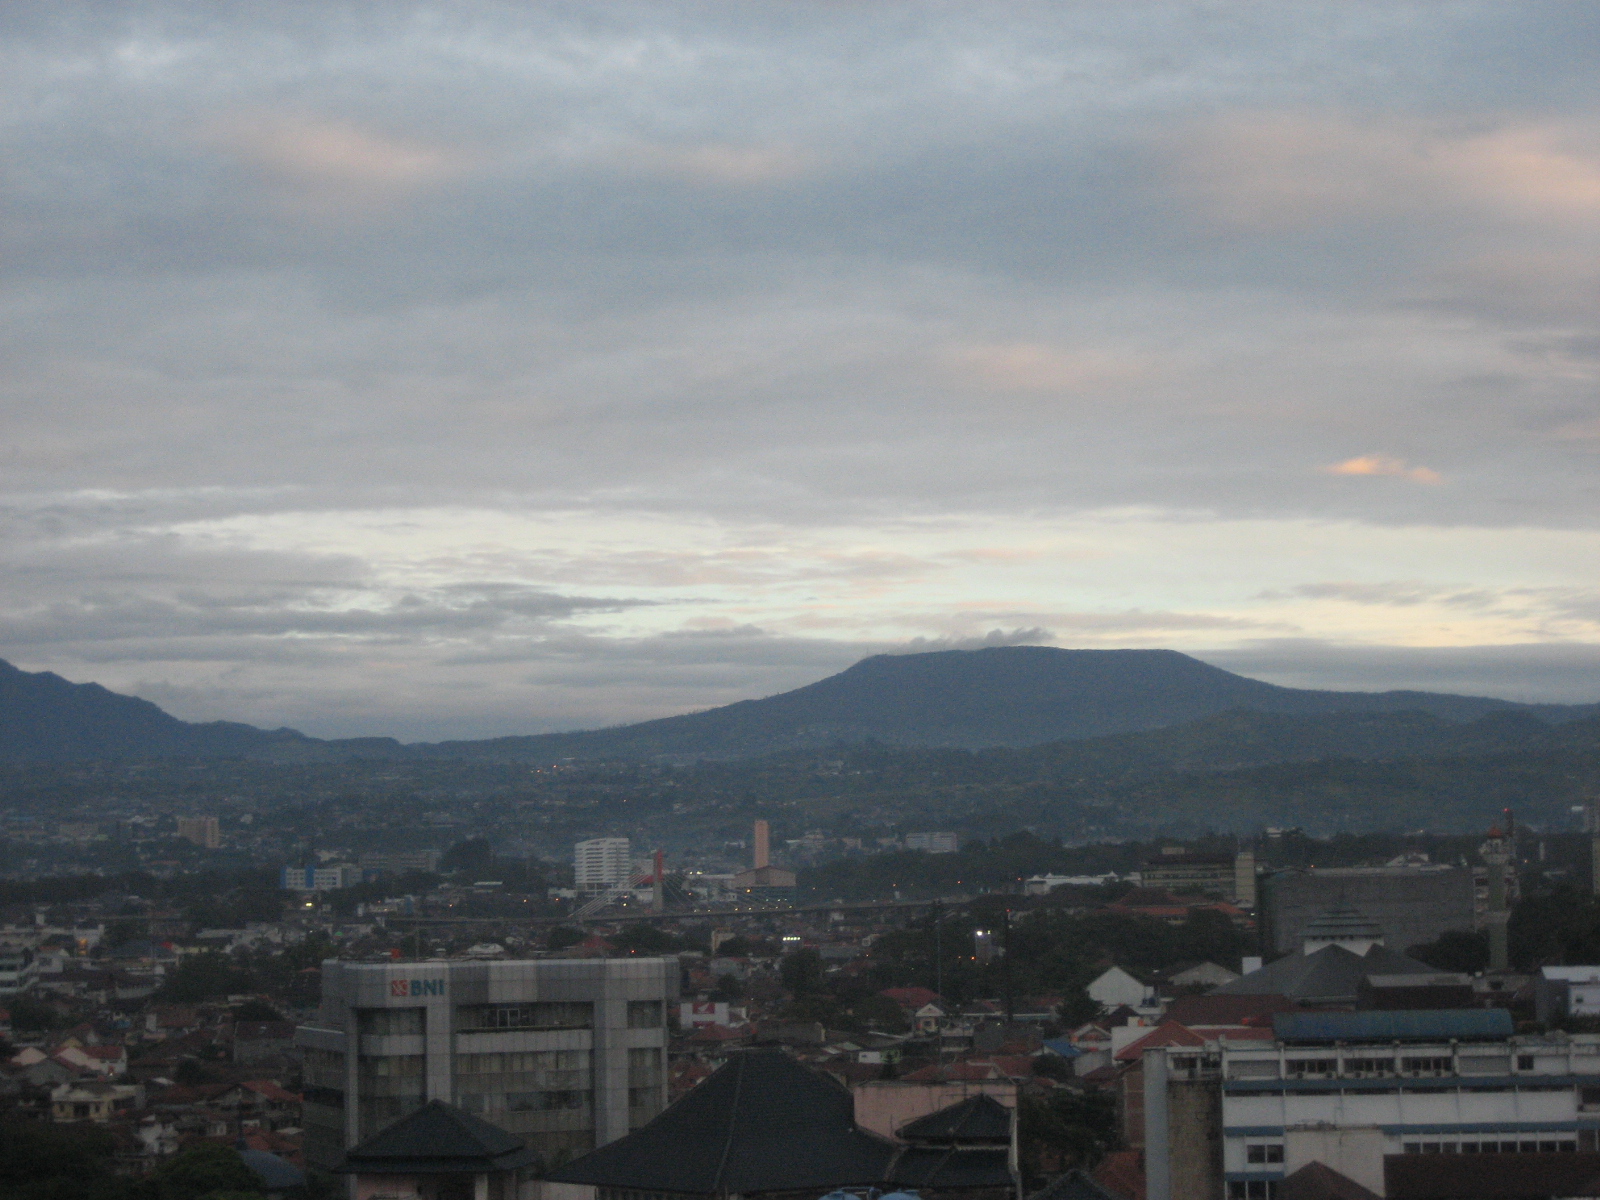 25 Hal yang Menjadi Icon Utama Kota Bandung  dejuldejuldejul